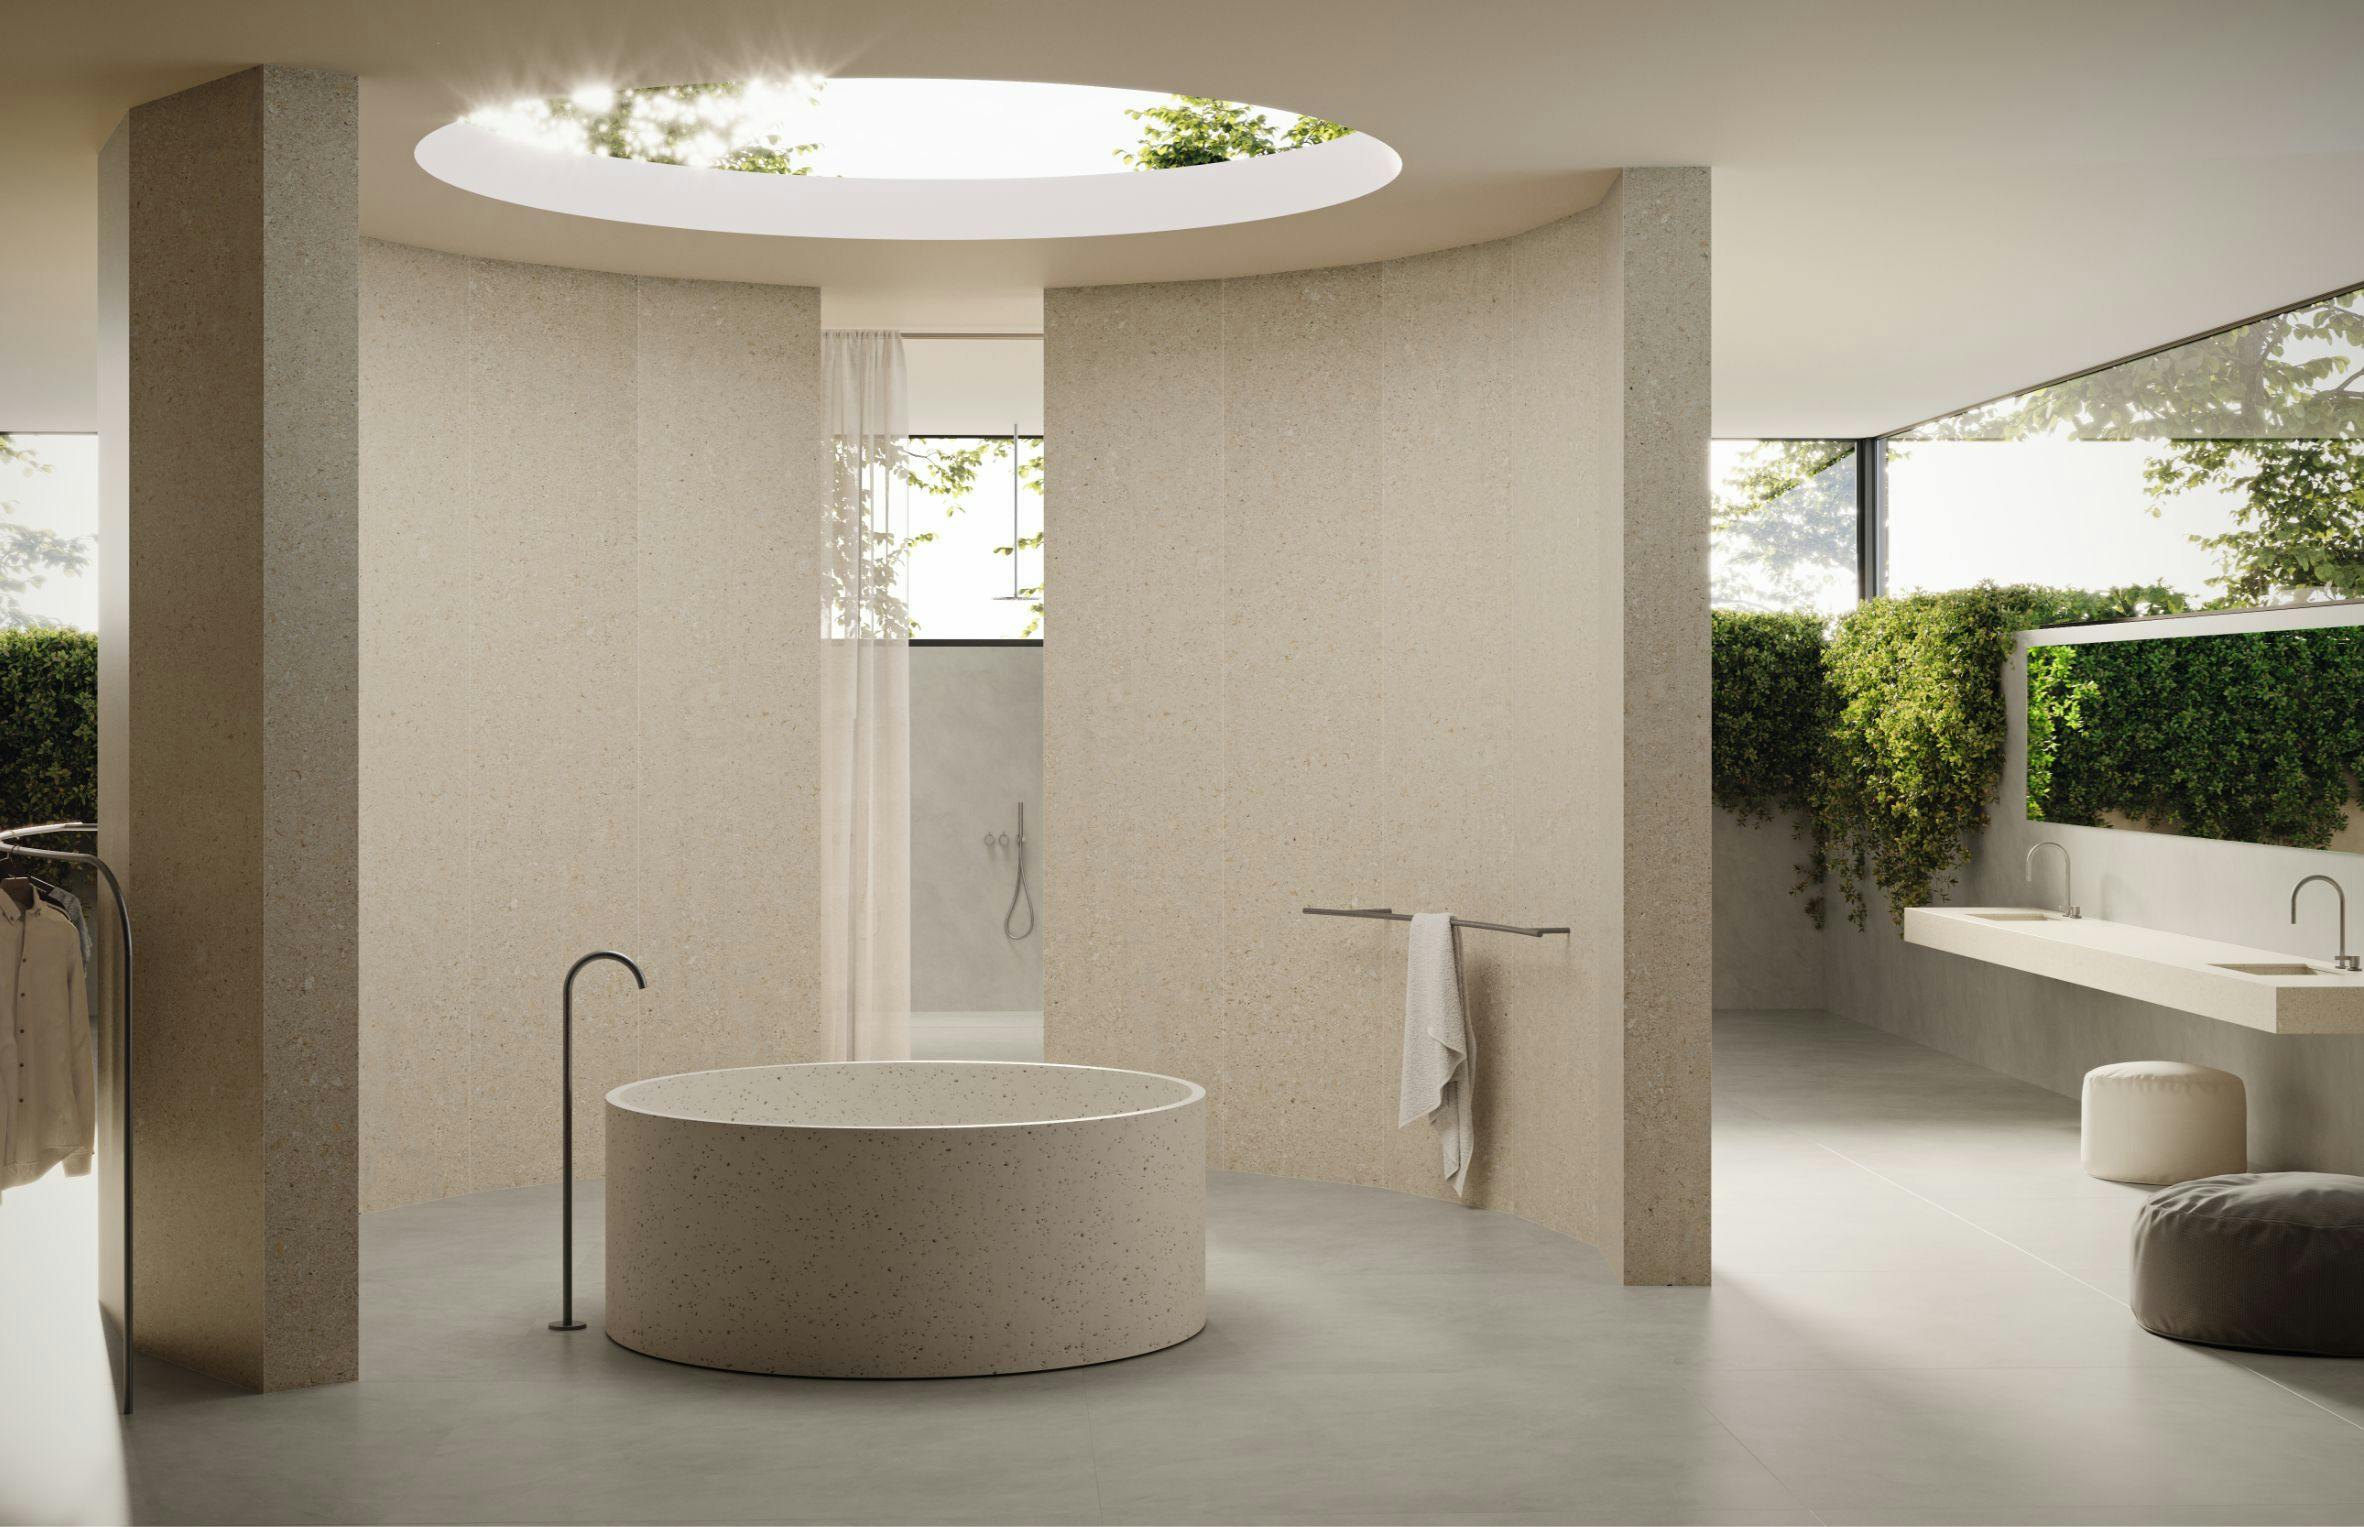 Numéro d'image 33 de la section actuelle de Ceppo: the calm and serene bathroom by Daniel Germani de Cosentino France